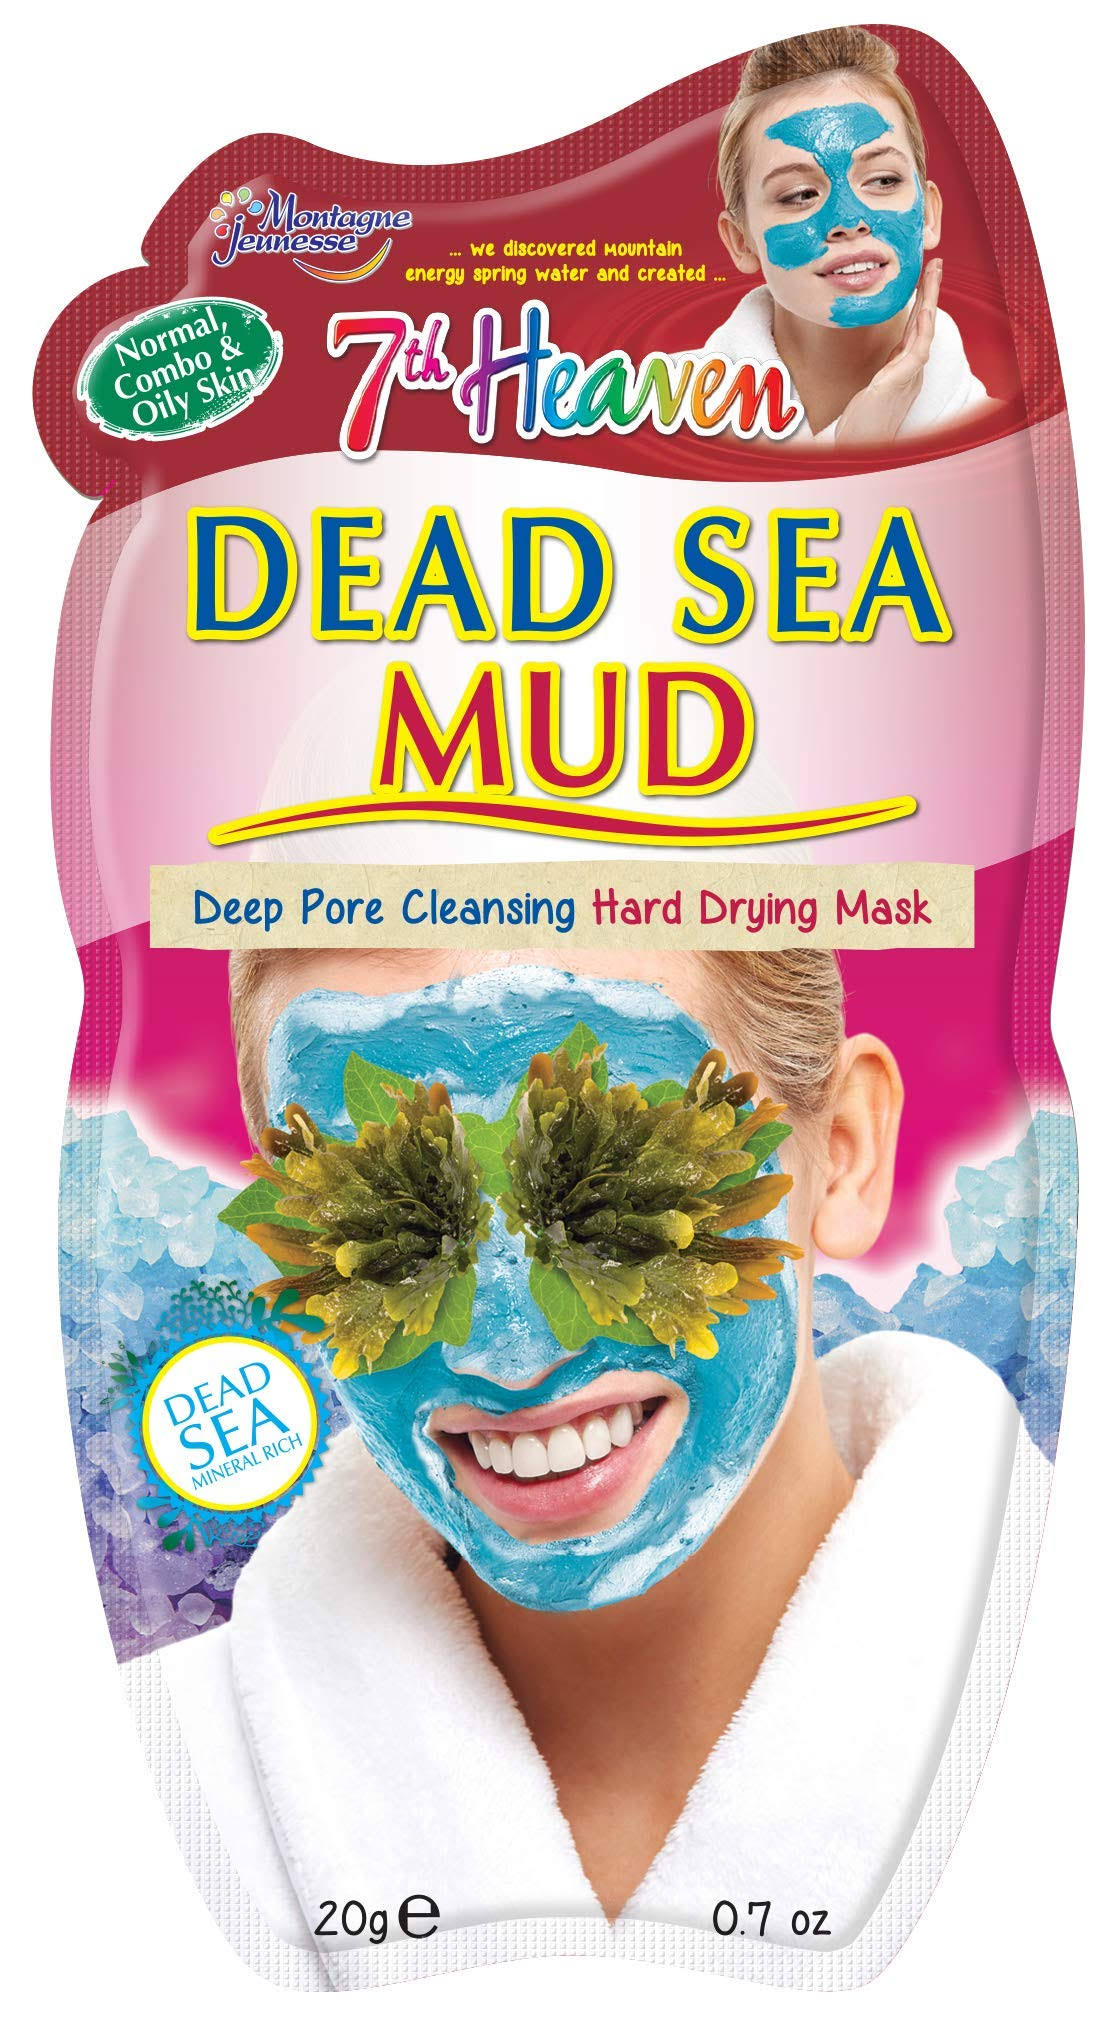 7th Heaven Dead Sea Mud Face Mask - 20g